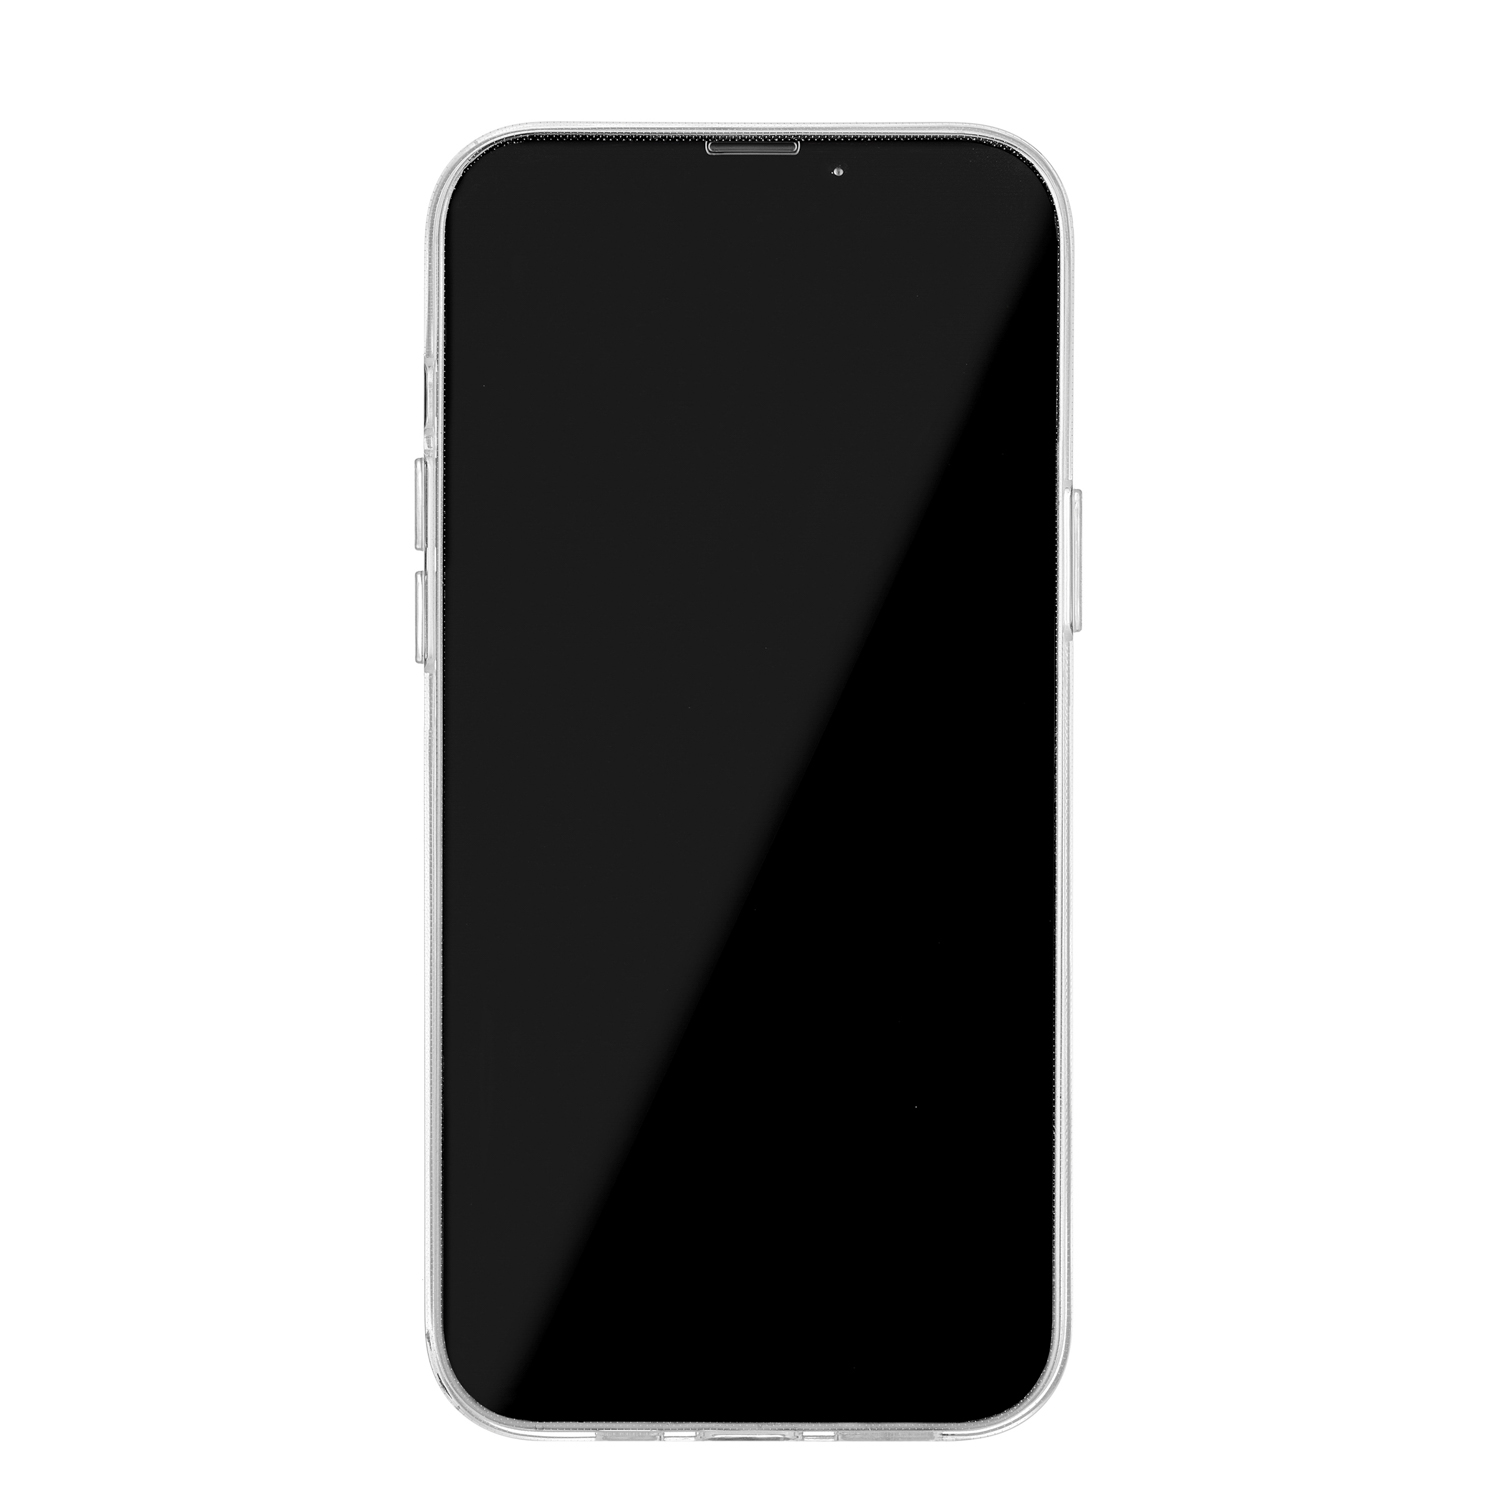 Tone case for iPhone 13 Pro Max TPU 0,8mm, прозрачный